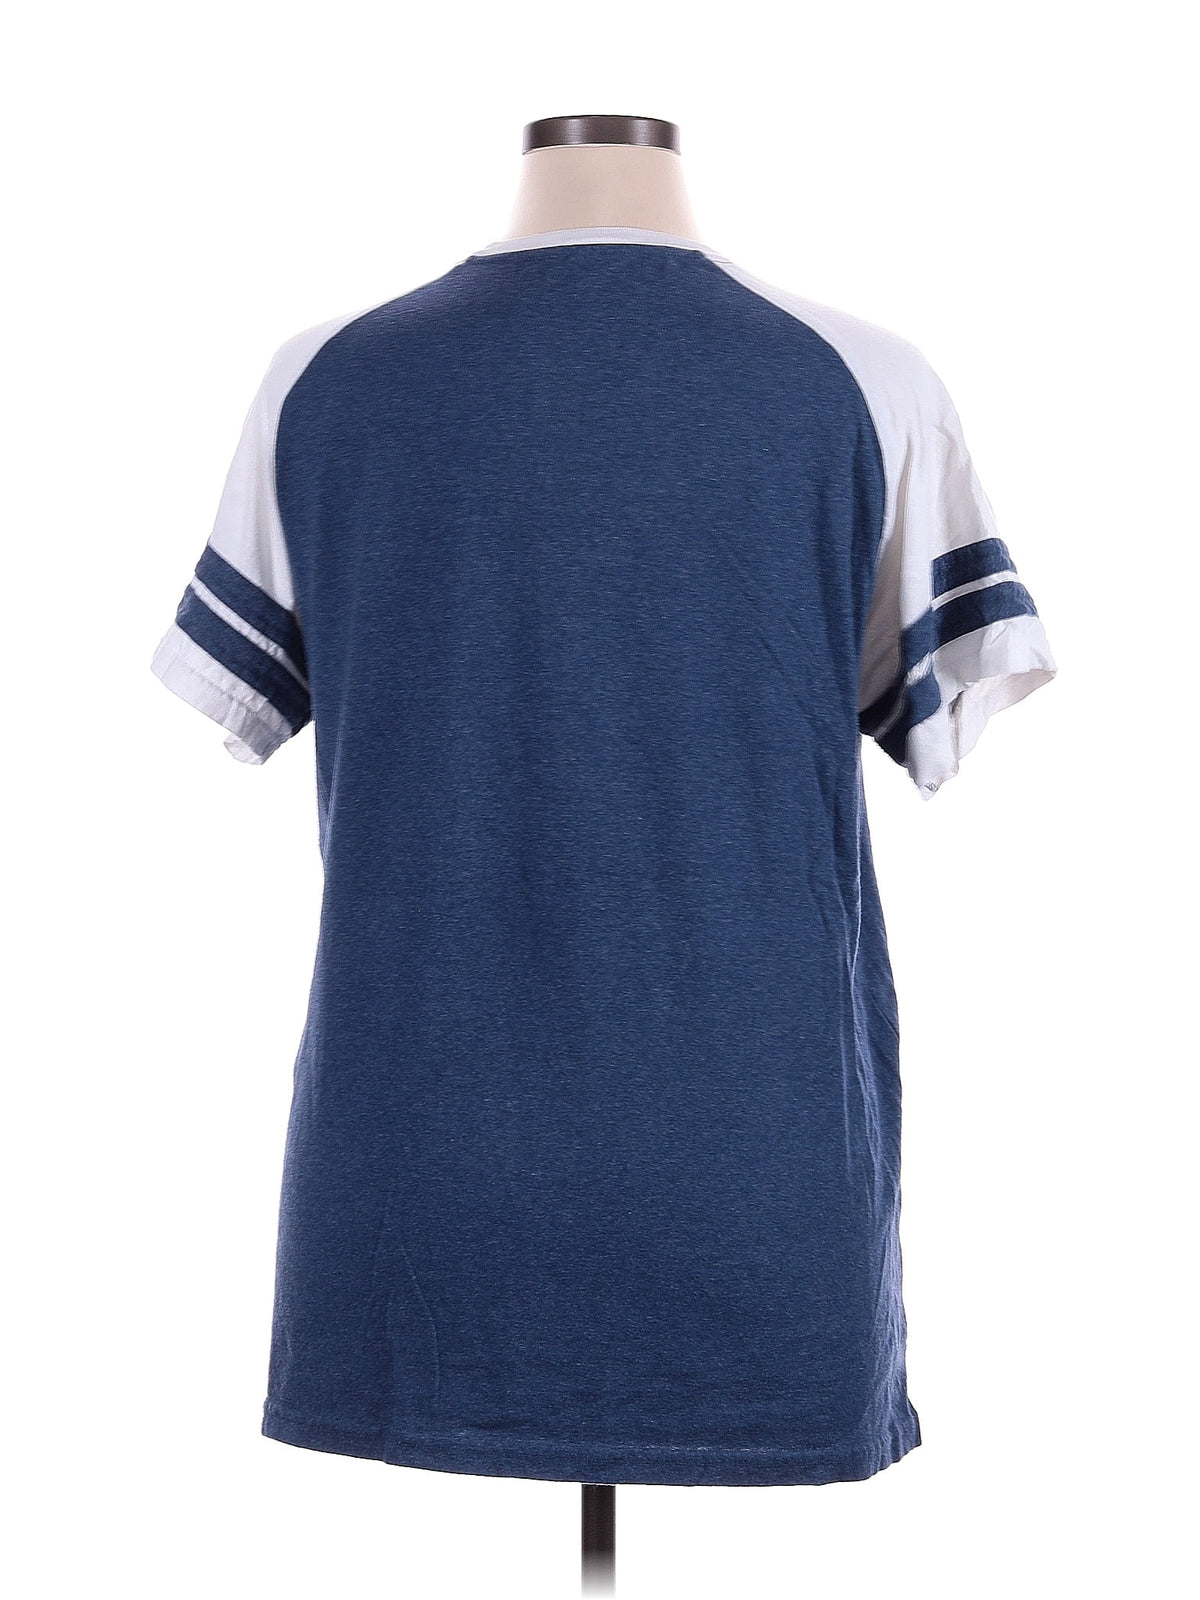 Short Sleeve T Shirt size - XL